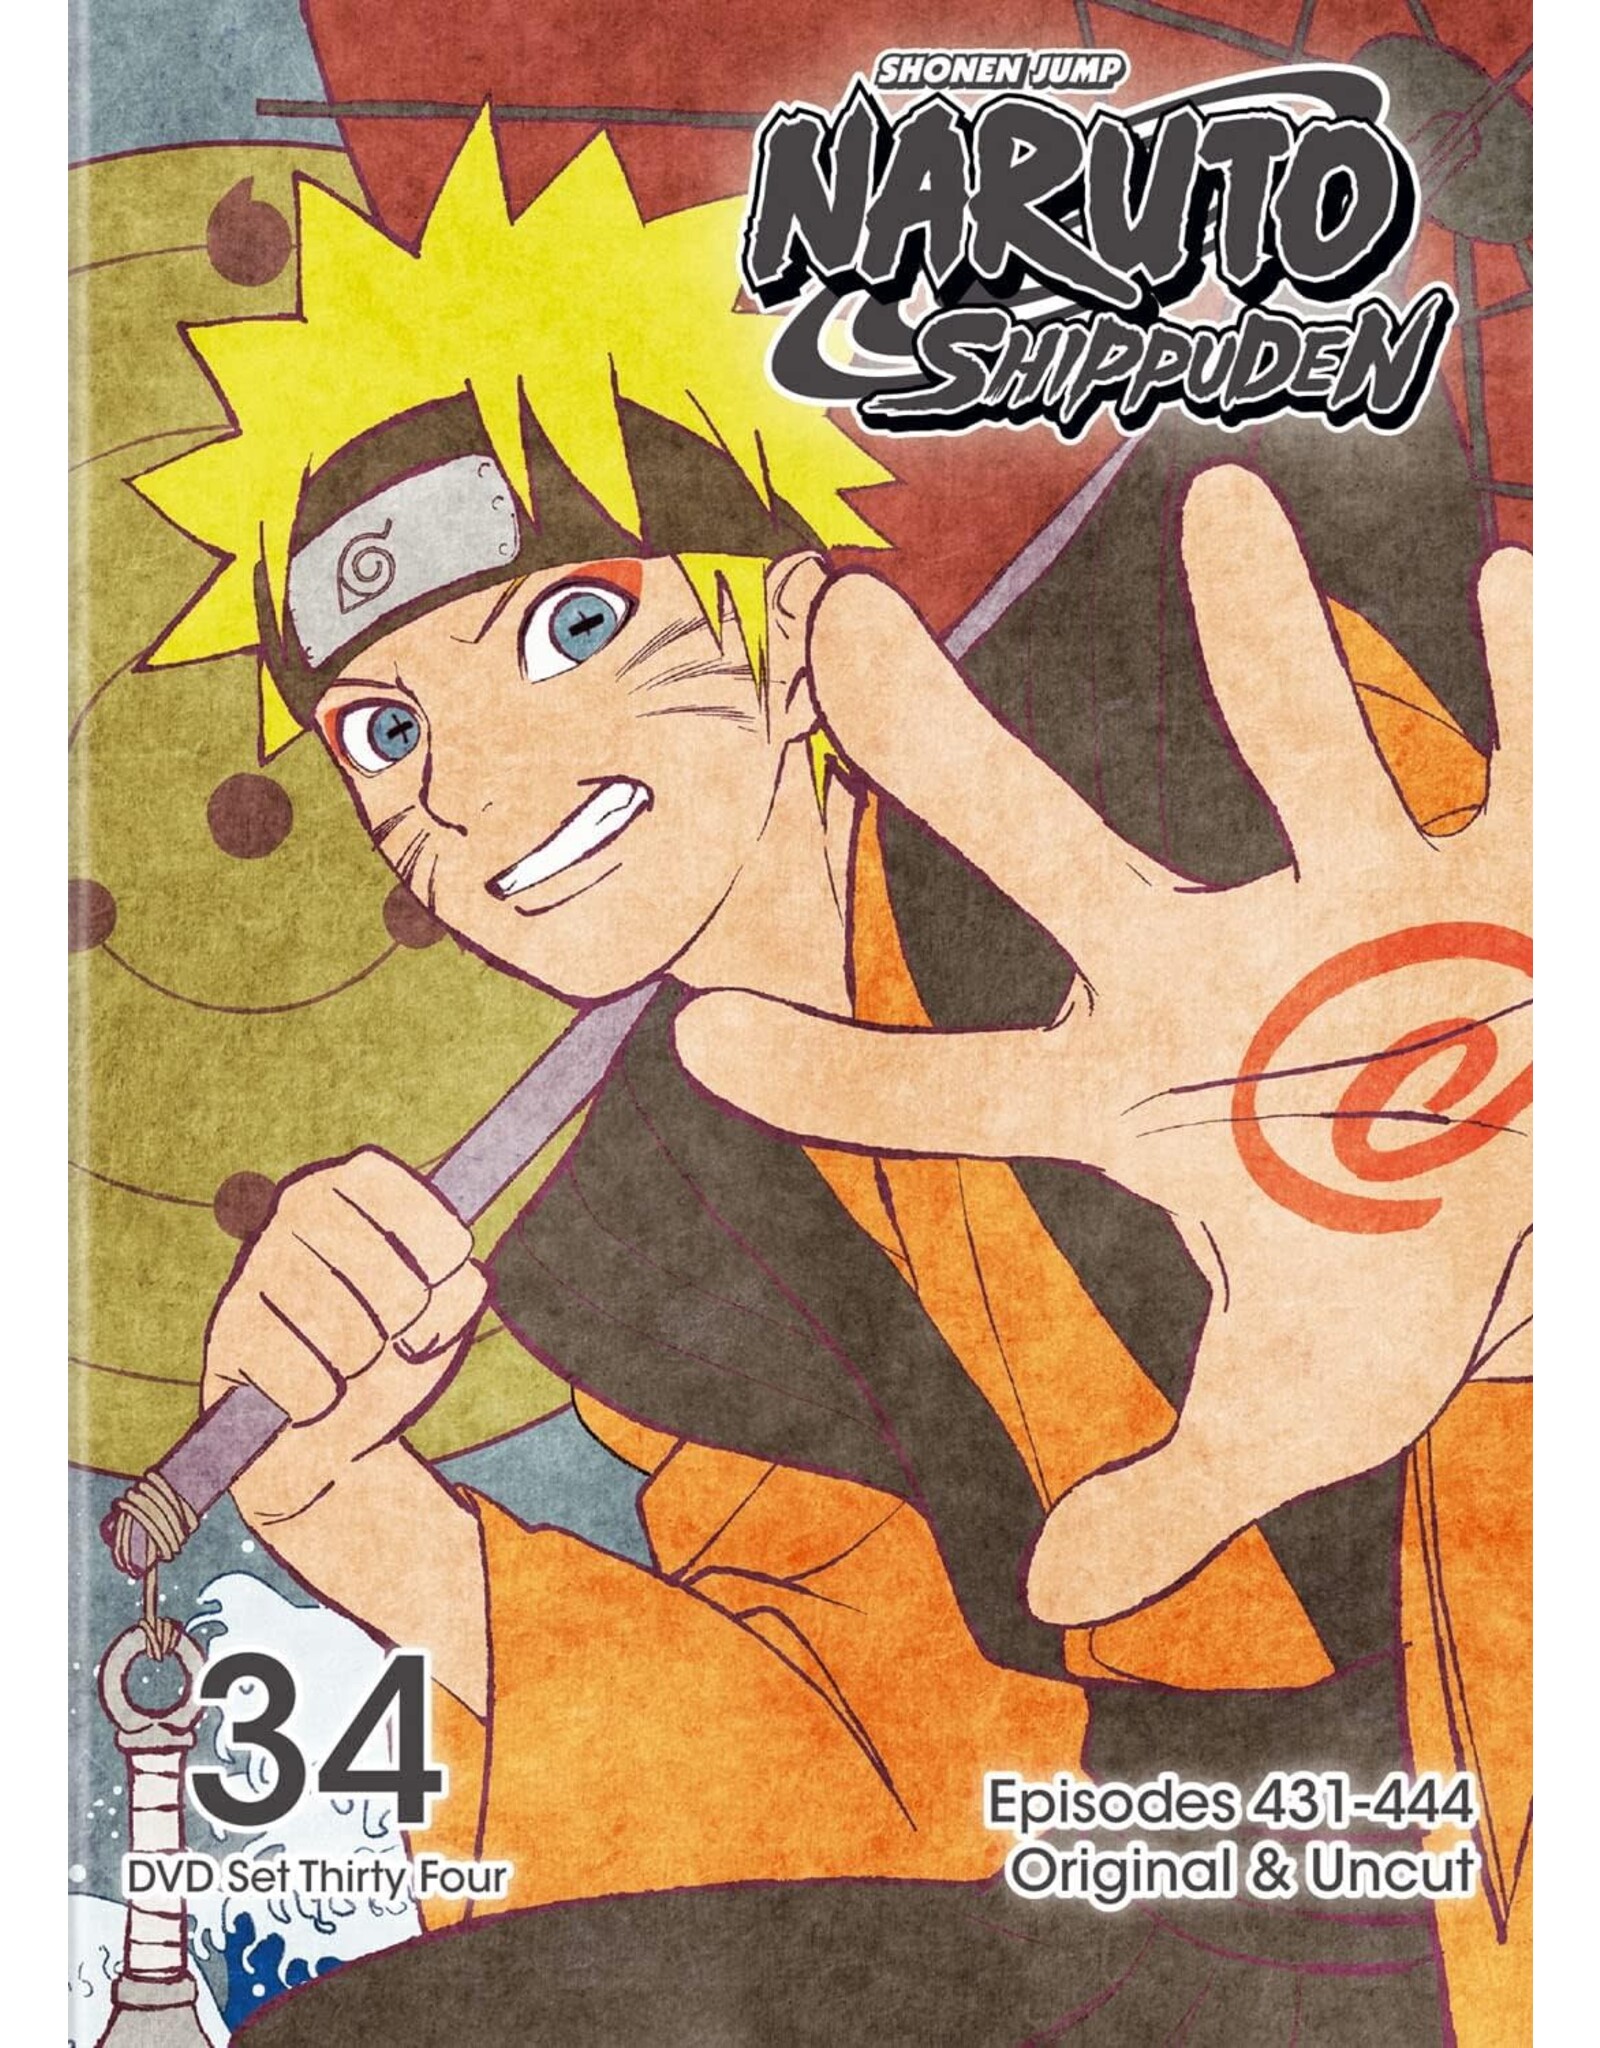 Anime & Animation Naruto Shippuden Uncut Set 34 (Brand New)